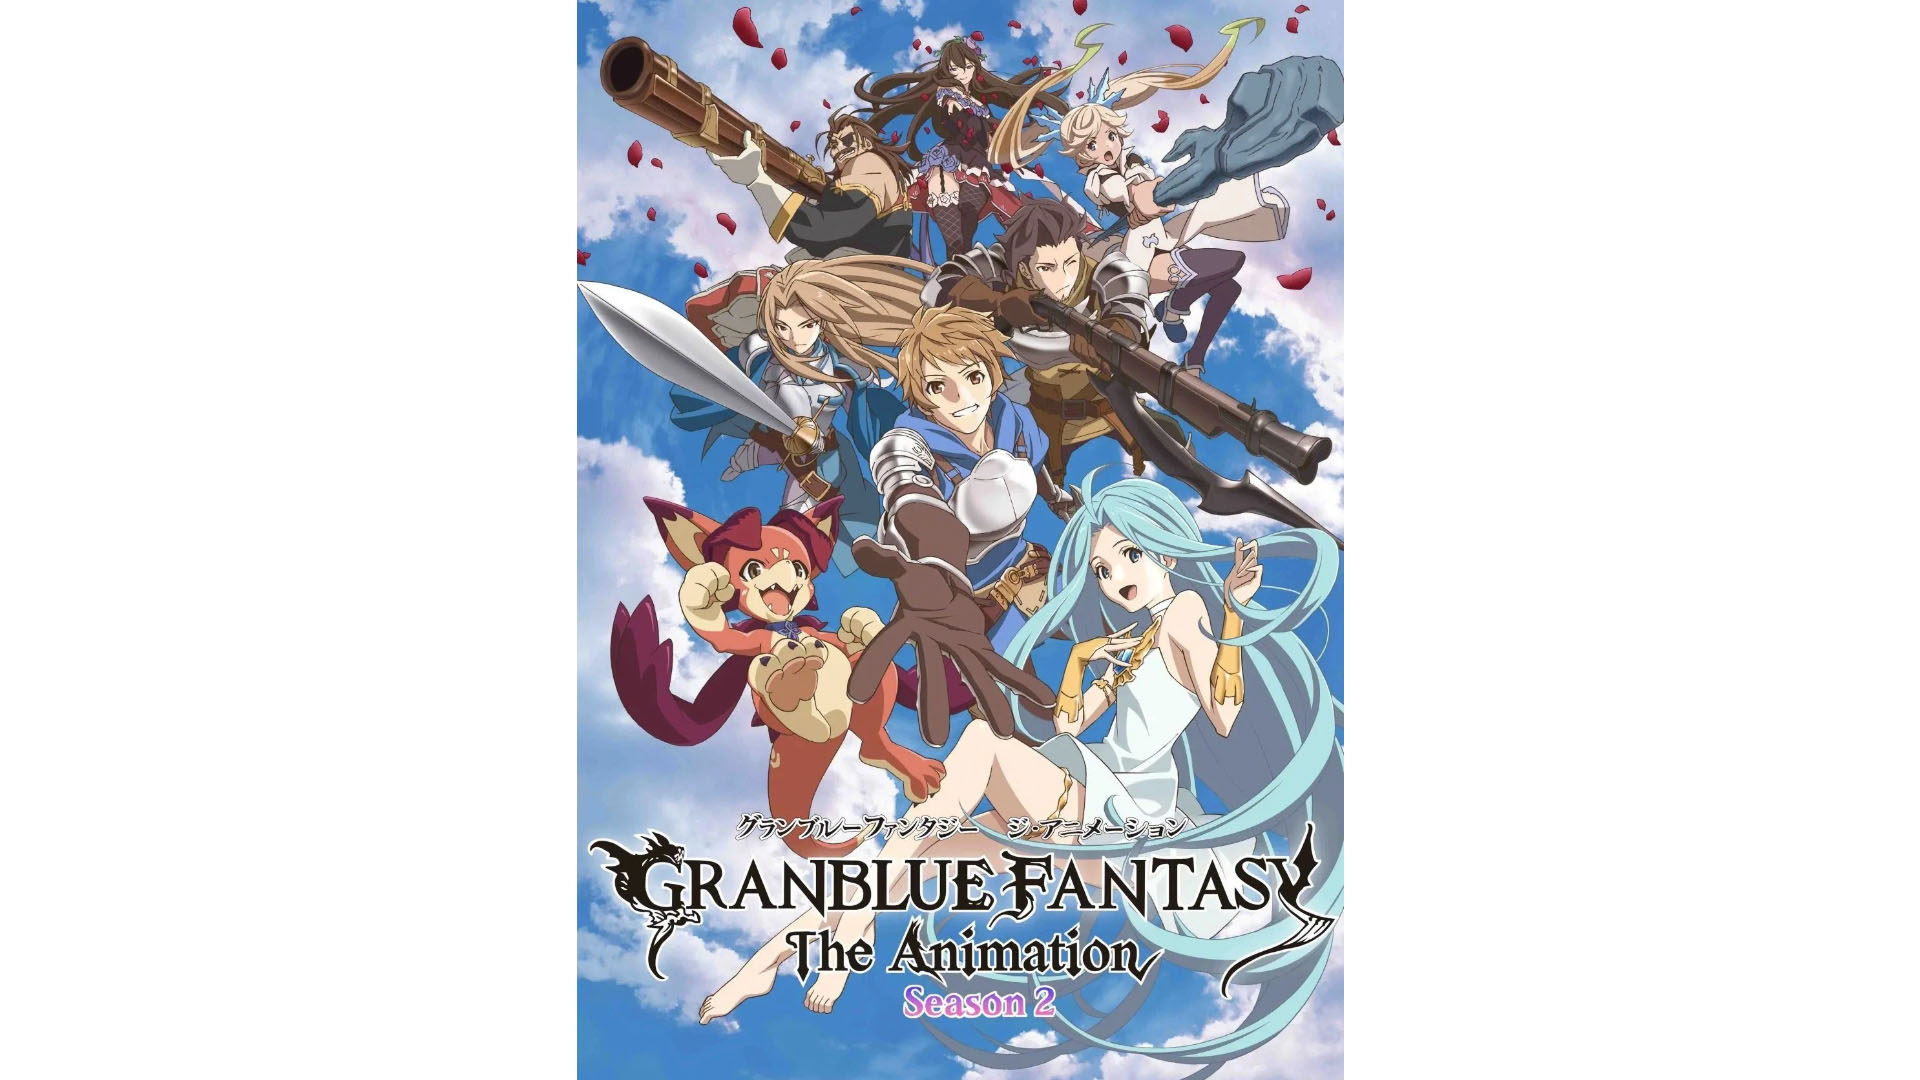 GRANBLUE FANTASY The Animation Season 2 (Granblue Fantasy: The